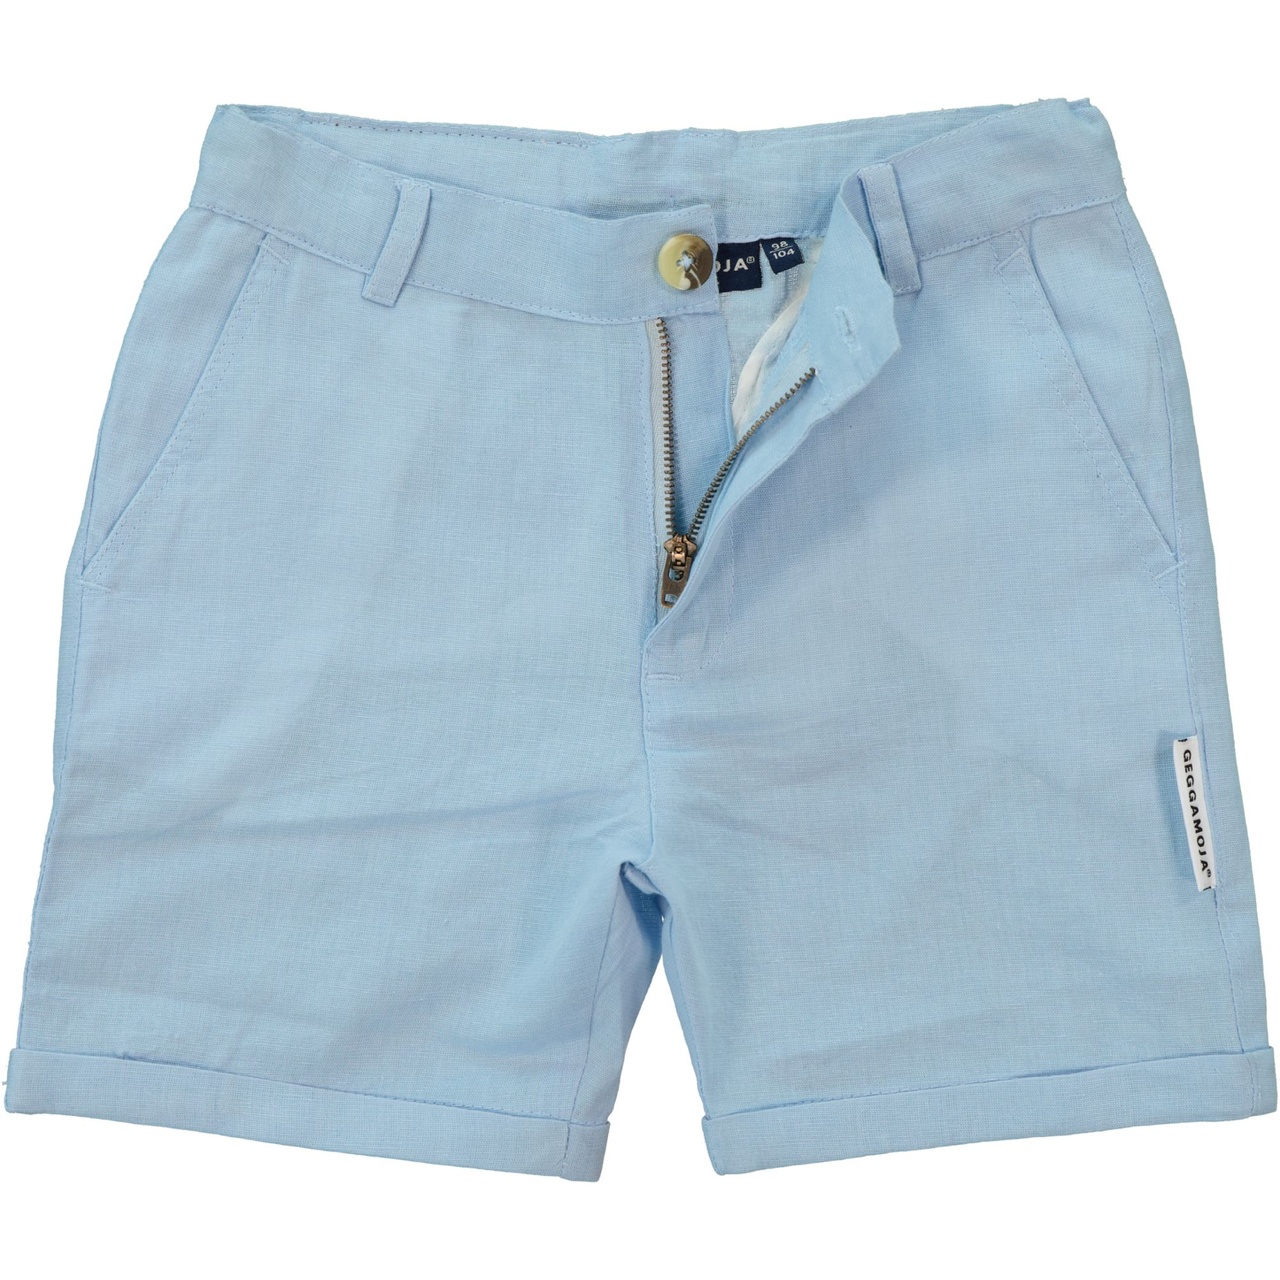 Linnen chino shorts Light blue 134/140